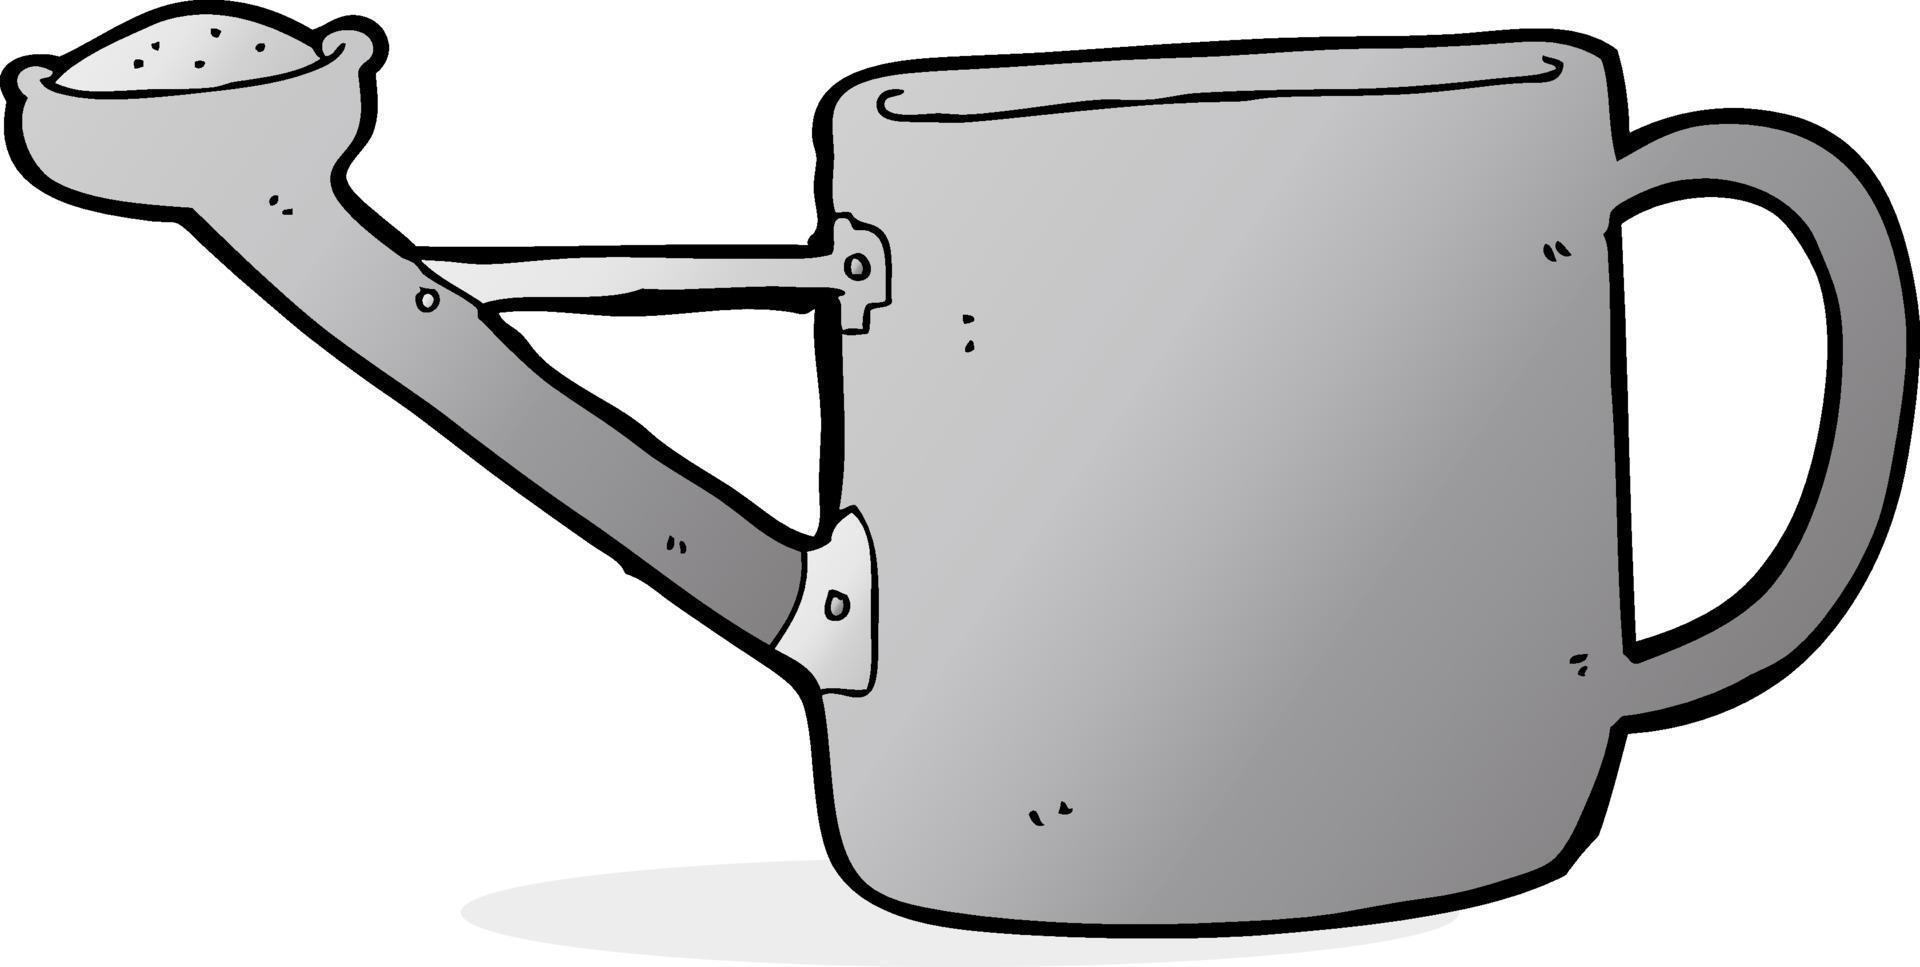 arrosoir dessin animé vecteur